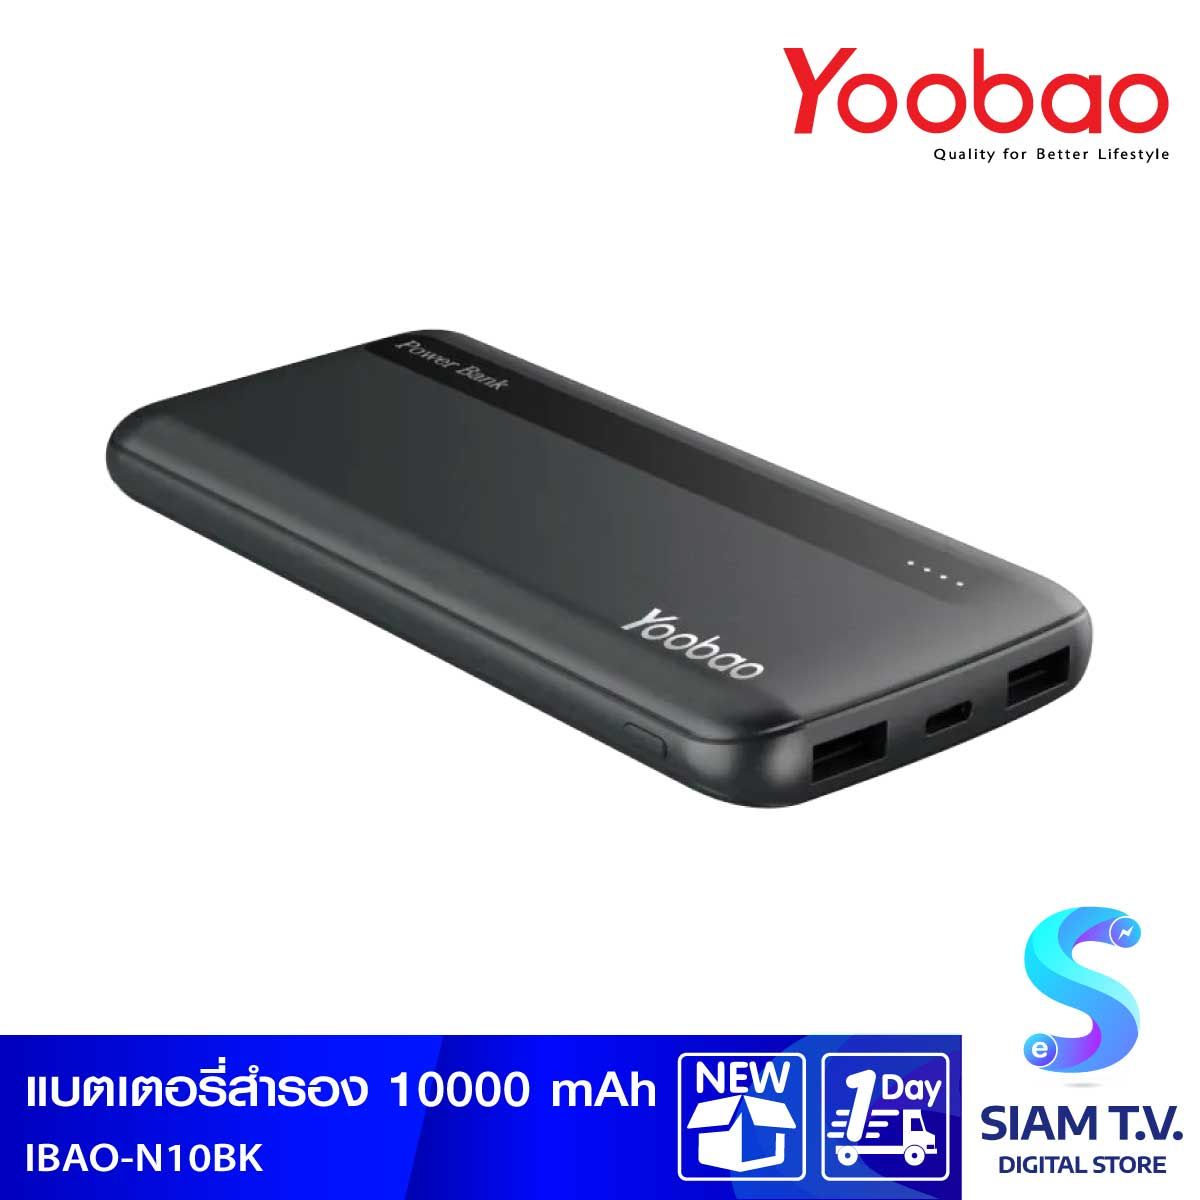 Yoobao Powerbank 10,000 mAh N10-V2 Black